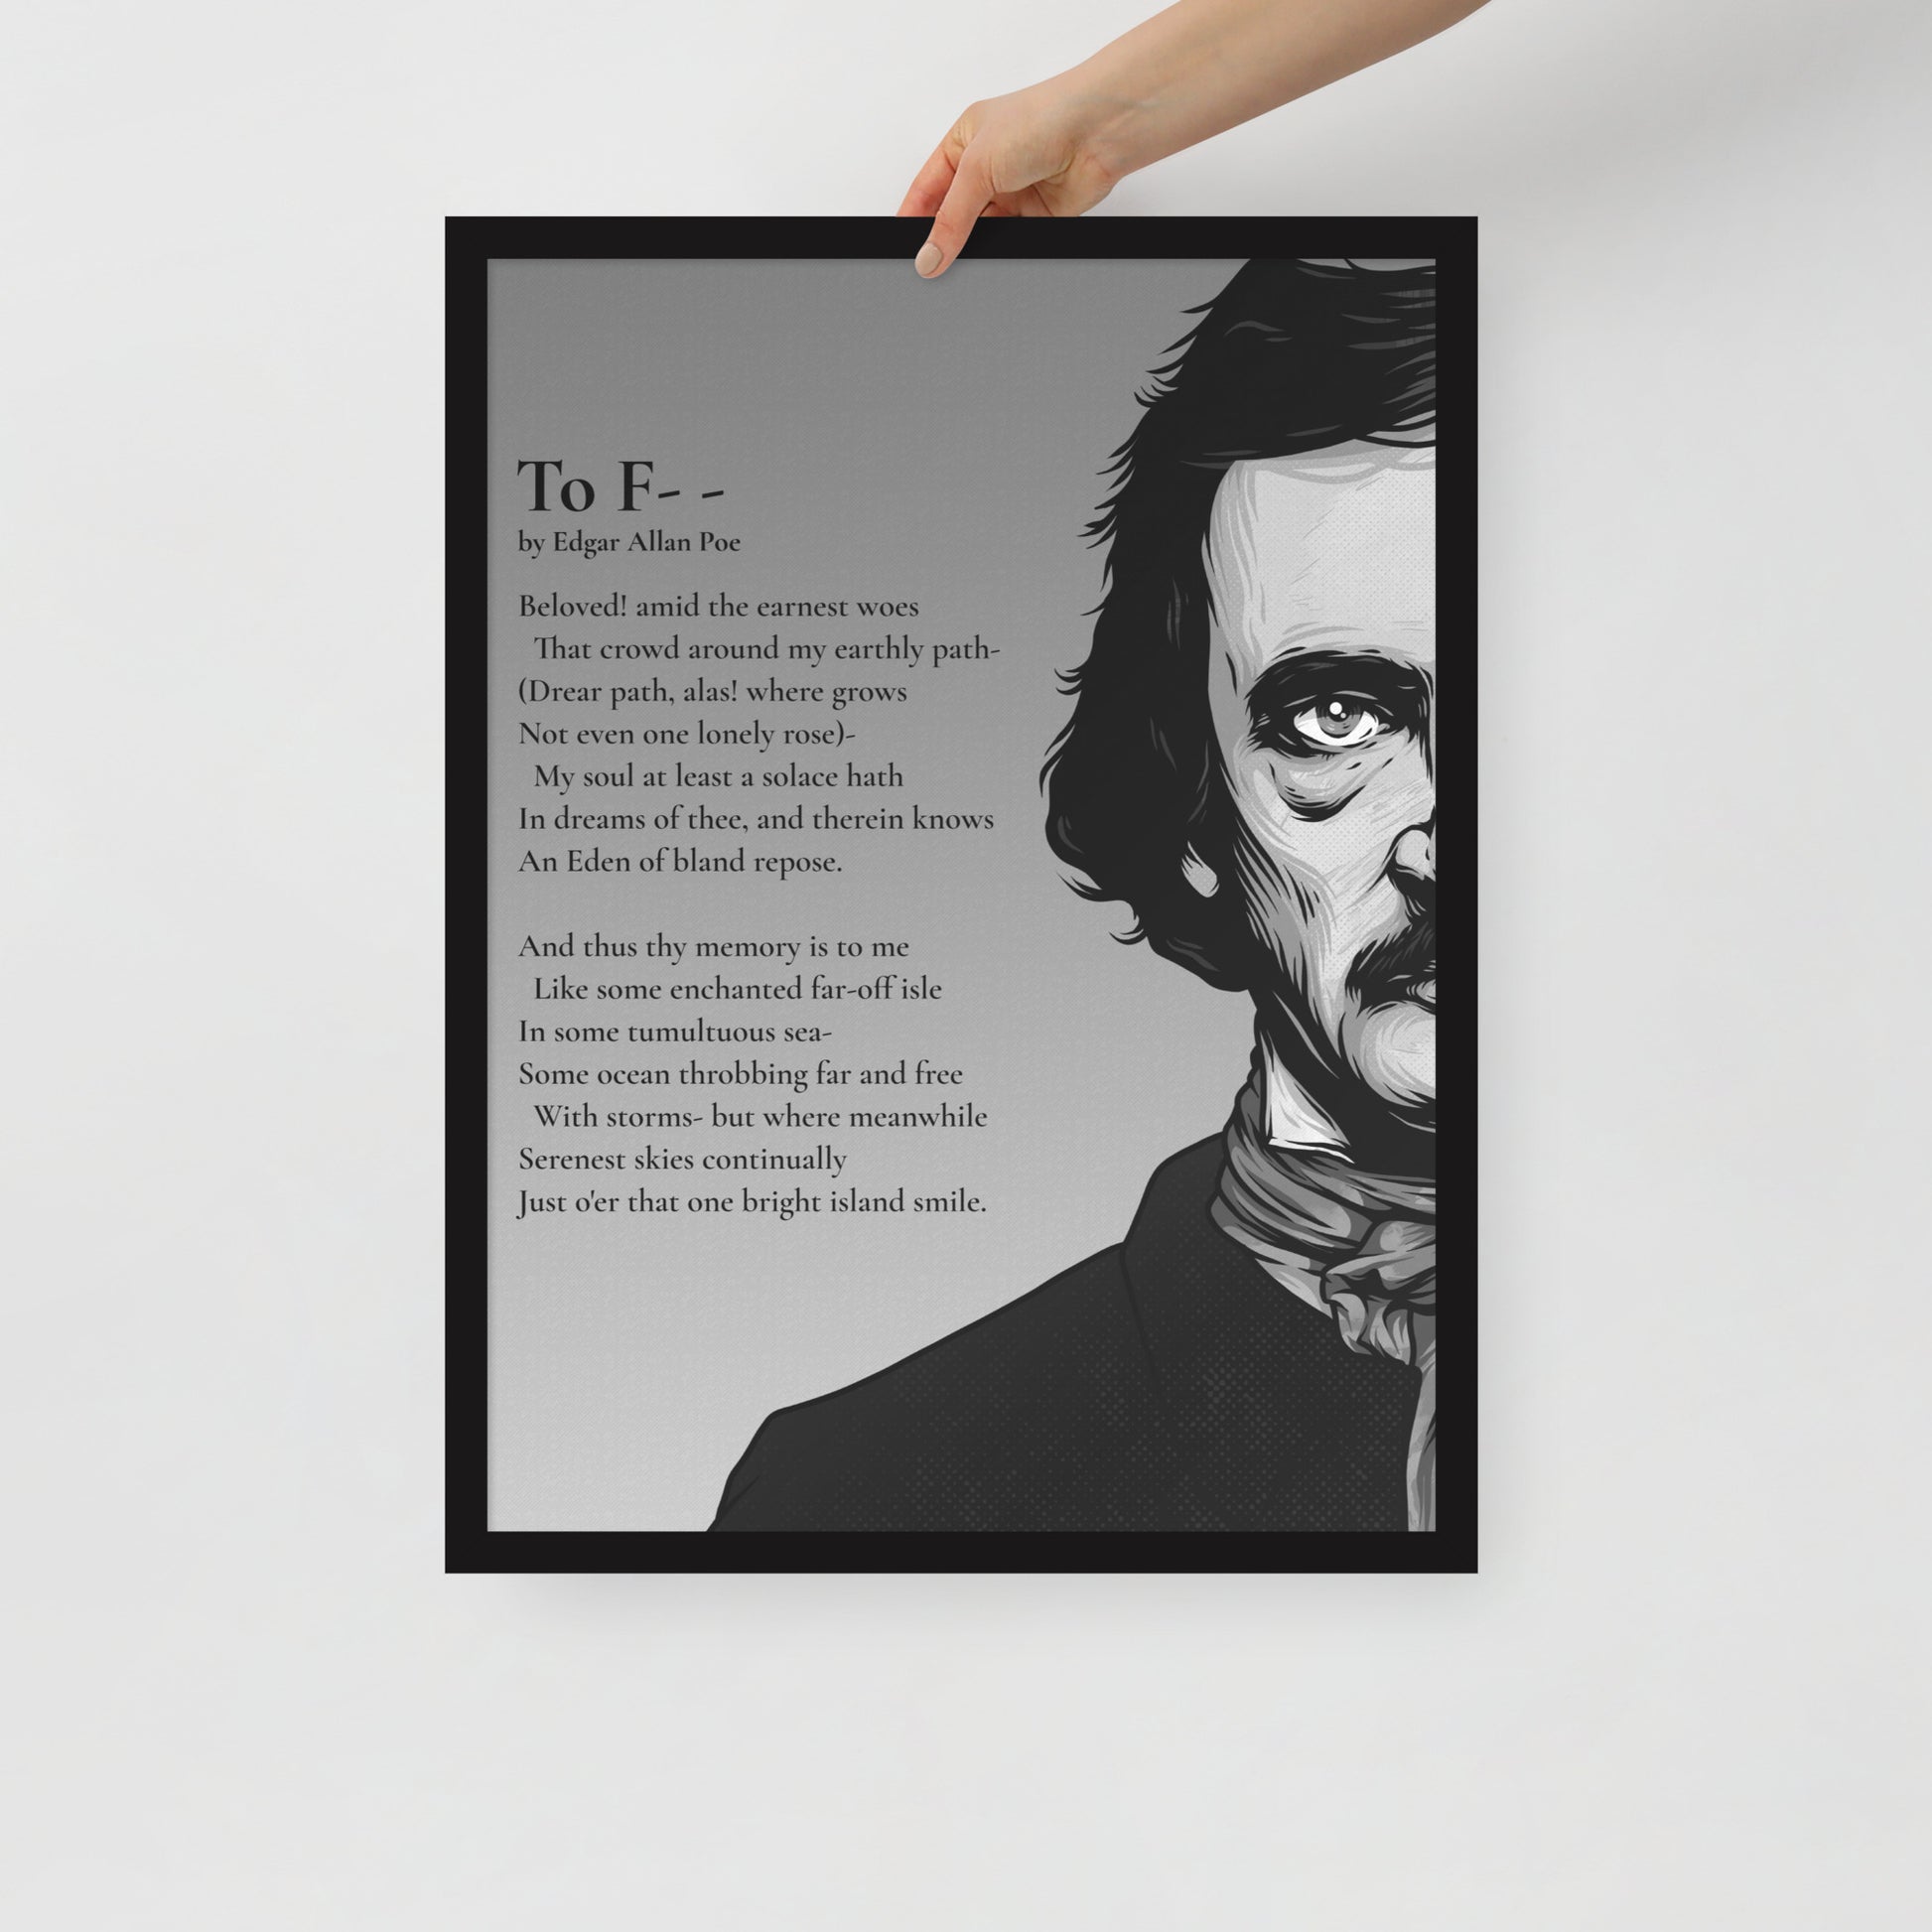 Edgar Allan Poe's 'To F--' Framed Matted Poster - 18 x 24 Black Frame